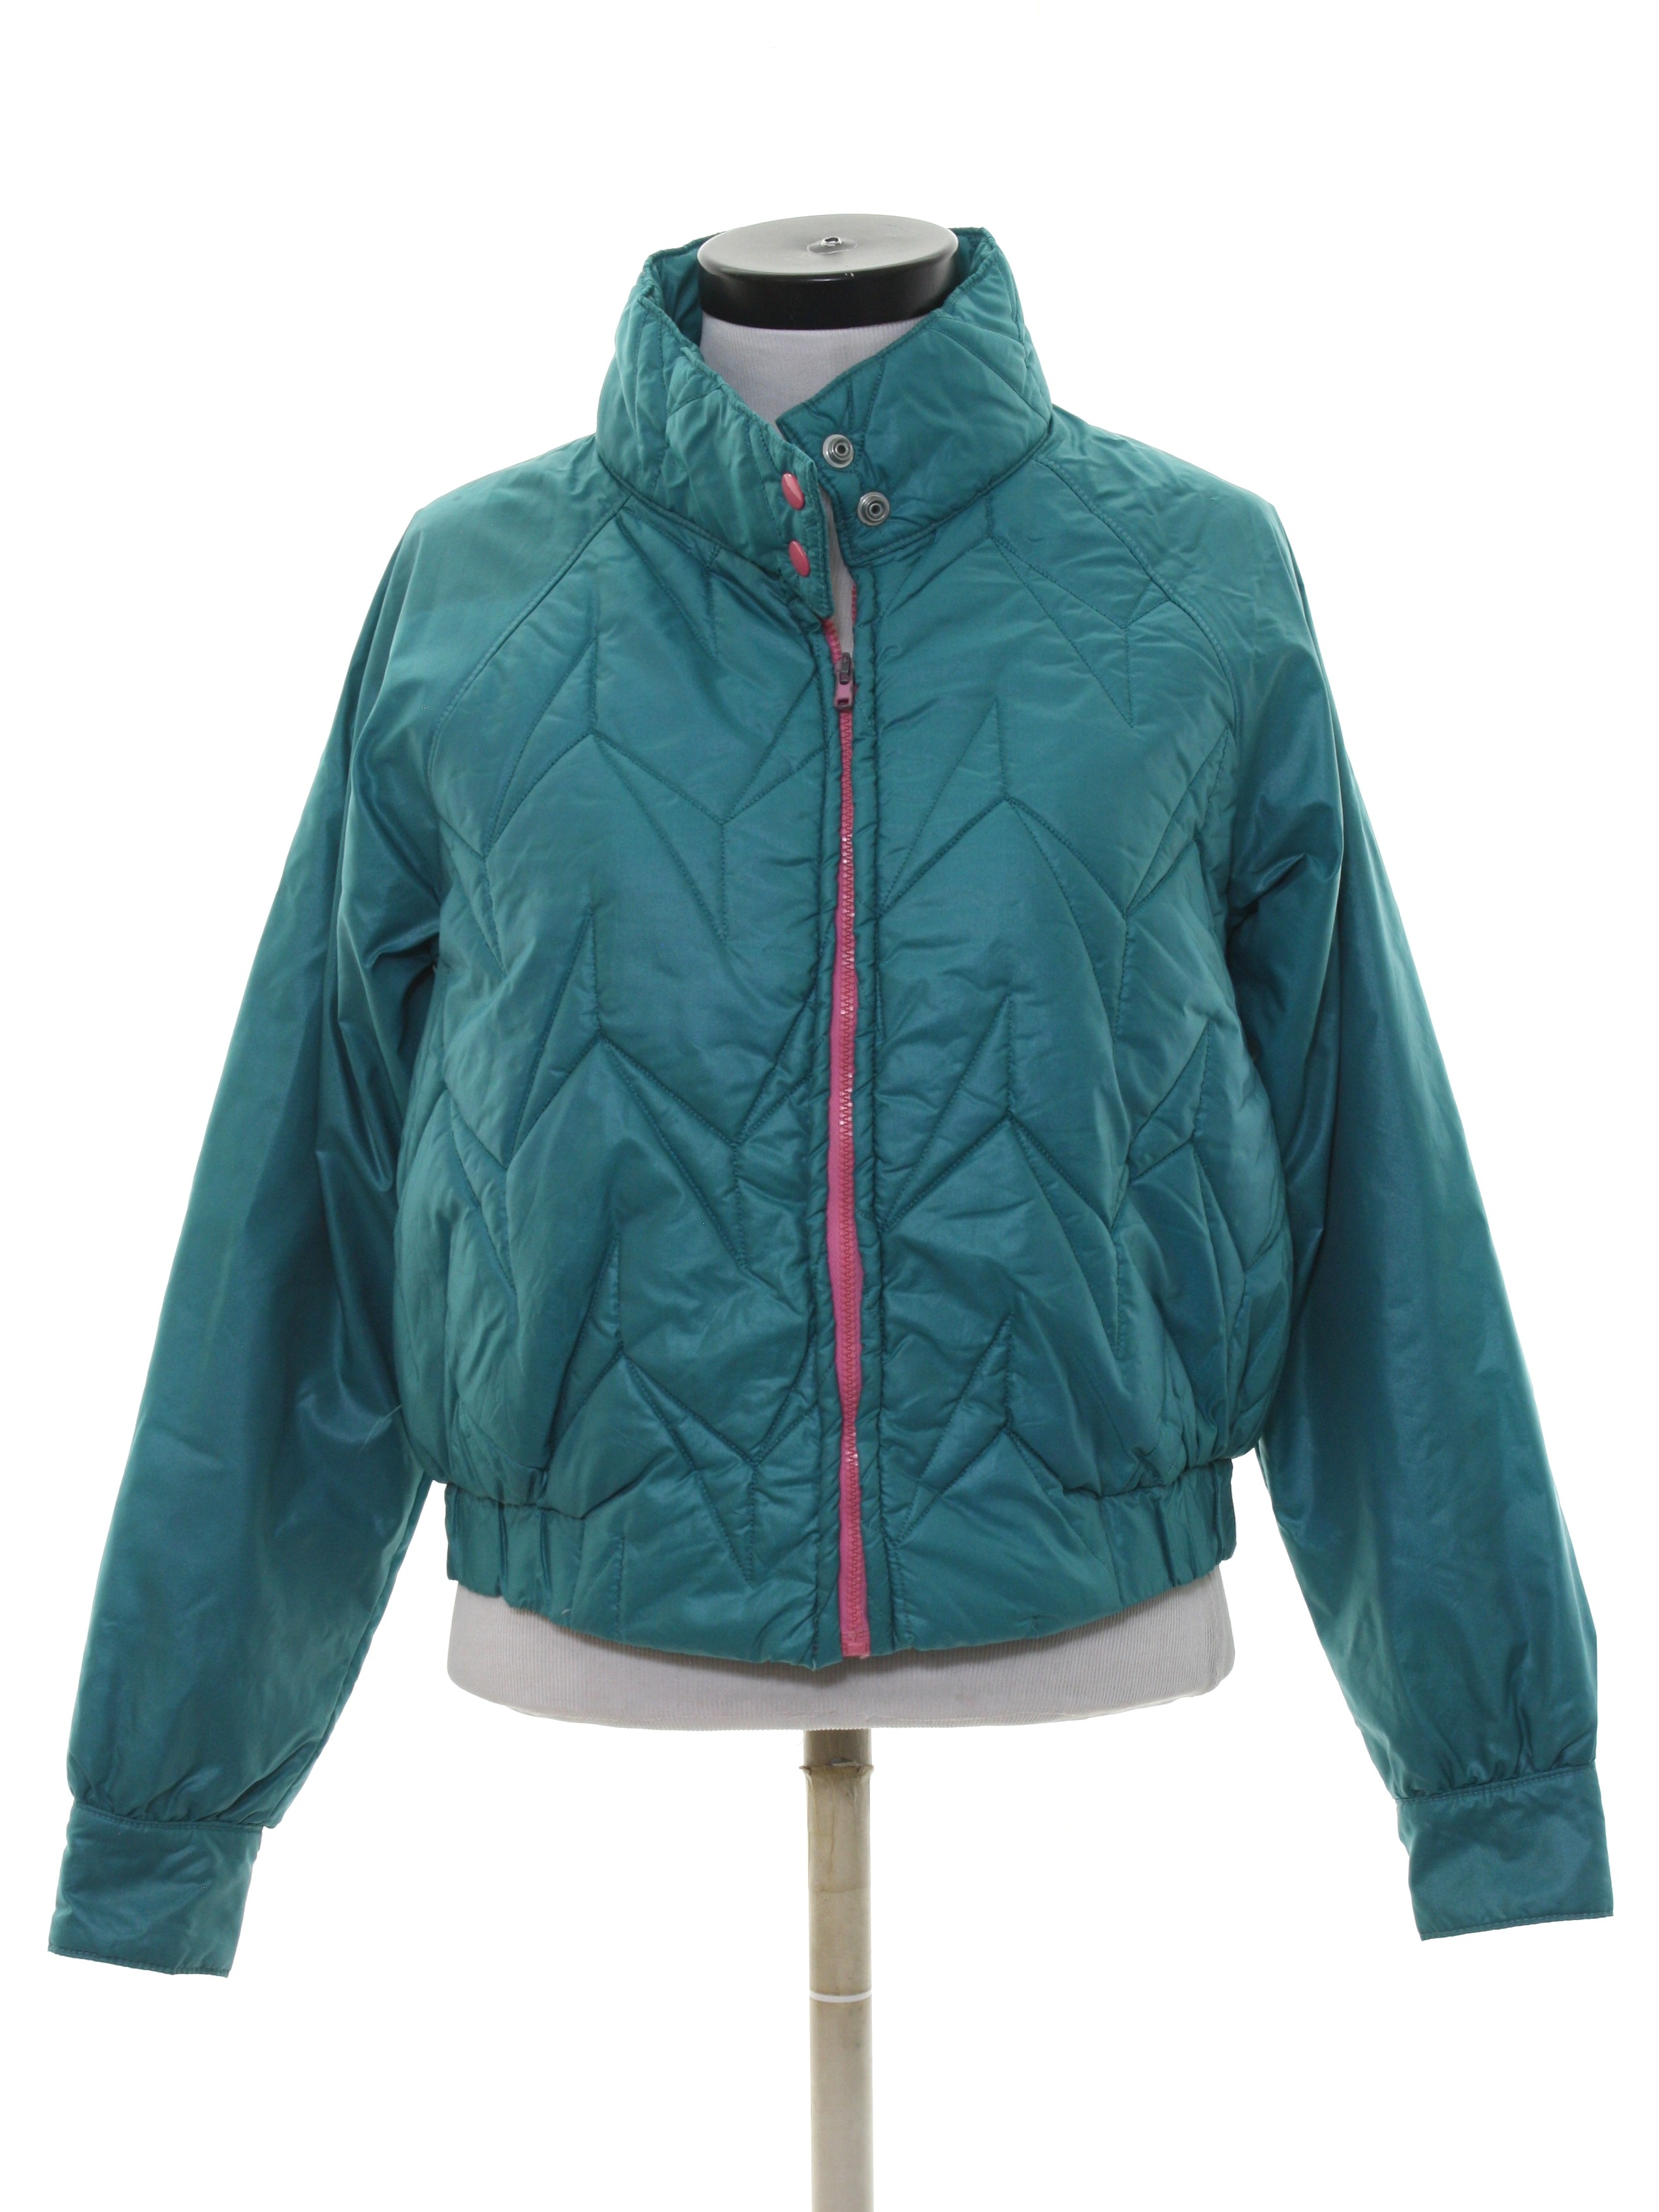 Retro 1980's Jacket (Jordache) : 80s -Jordache- Womens shiny mint green ...